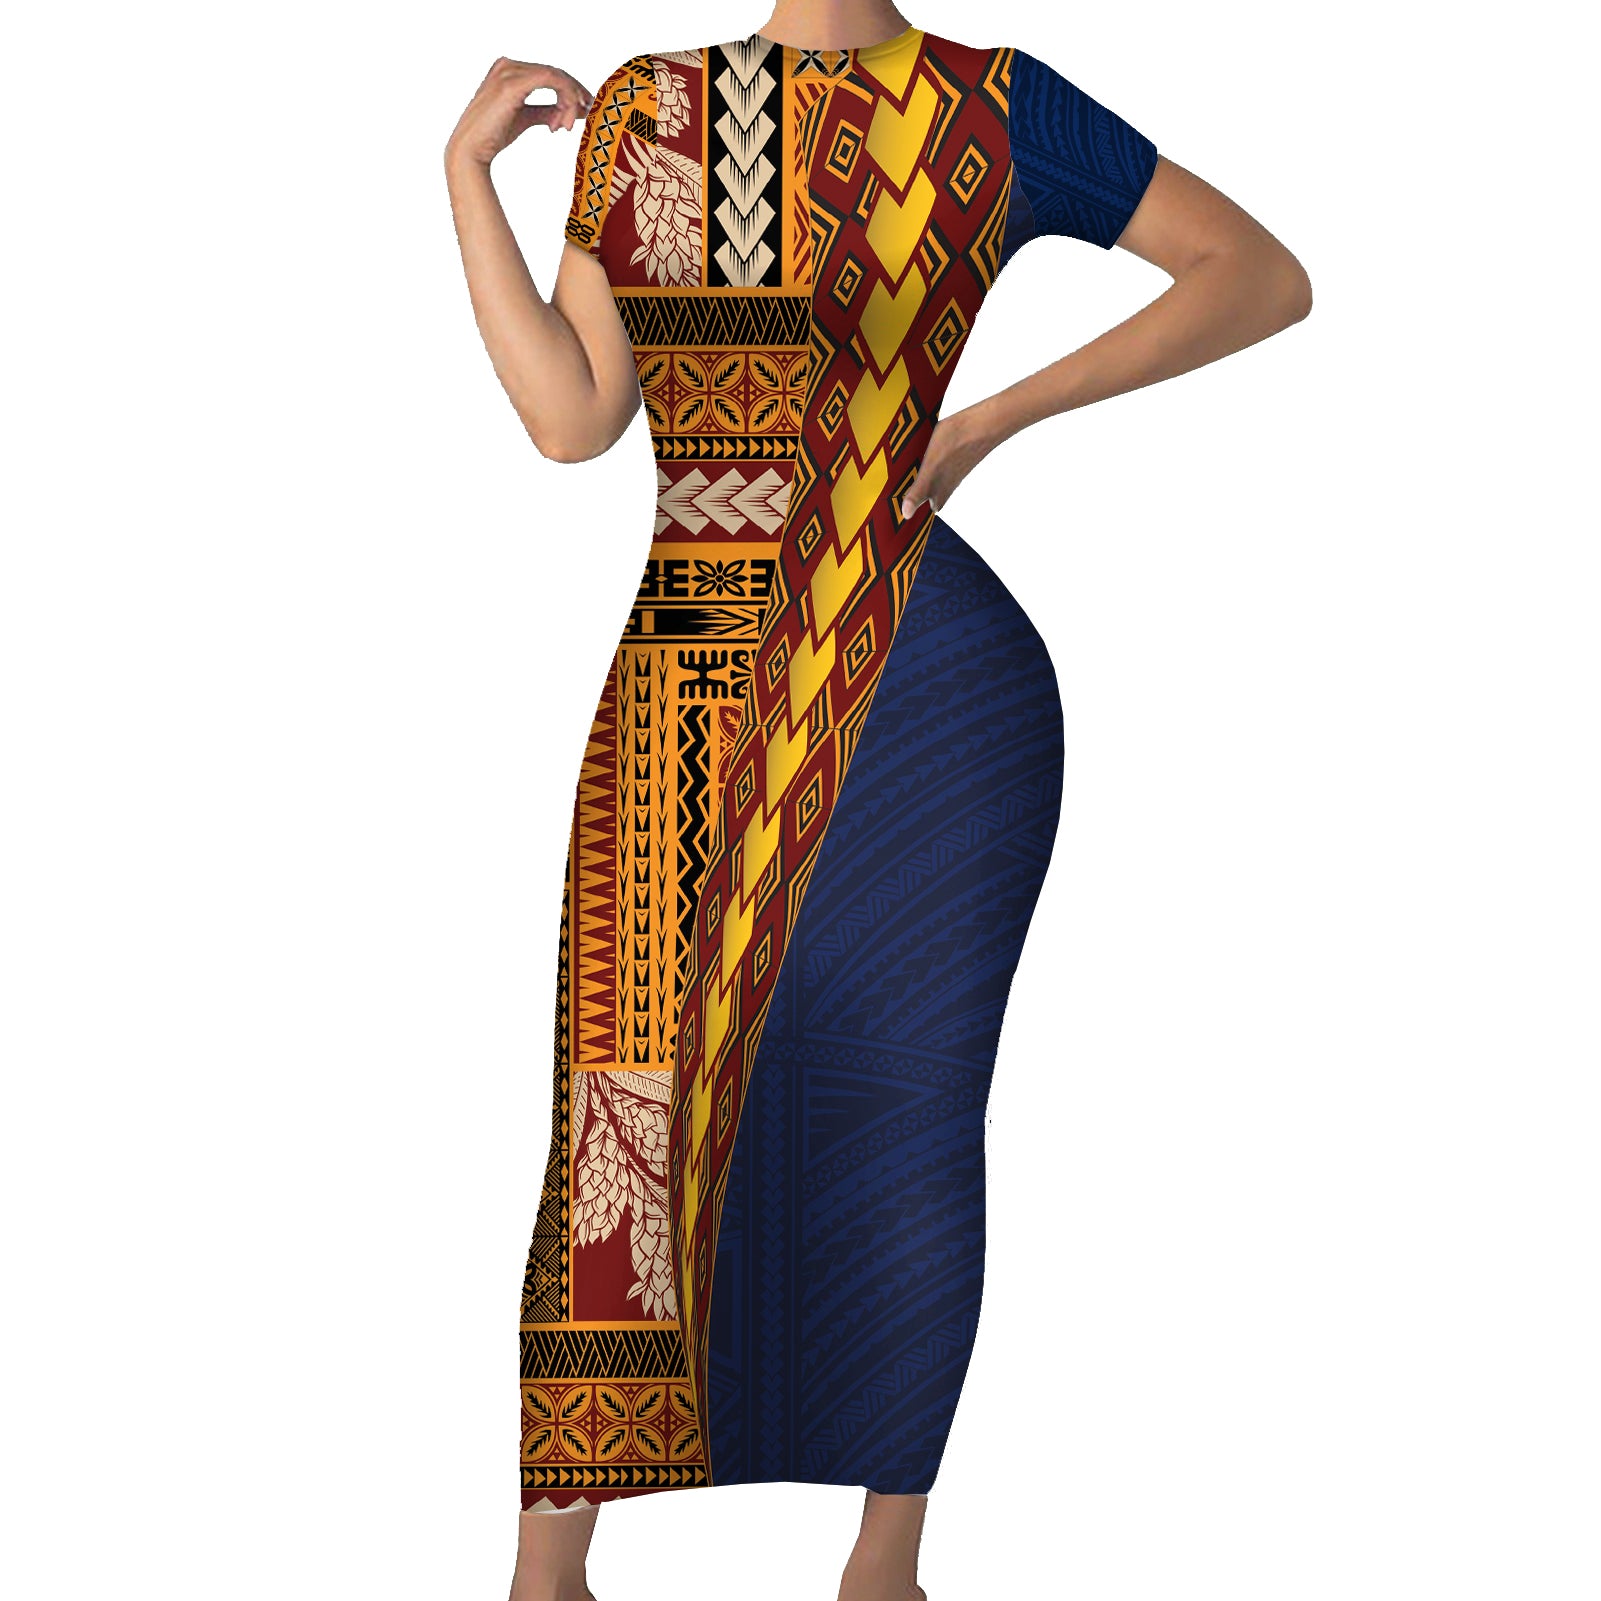 Samoa Siapo Motif Half Style Short Sleeve Bodycon Dress Colorful Version